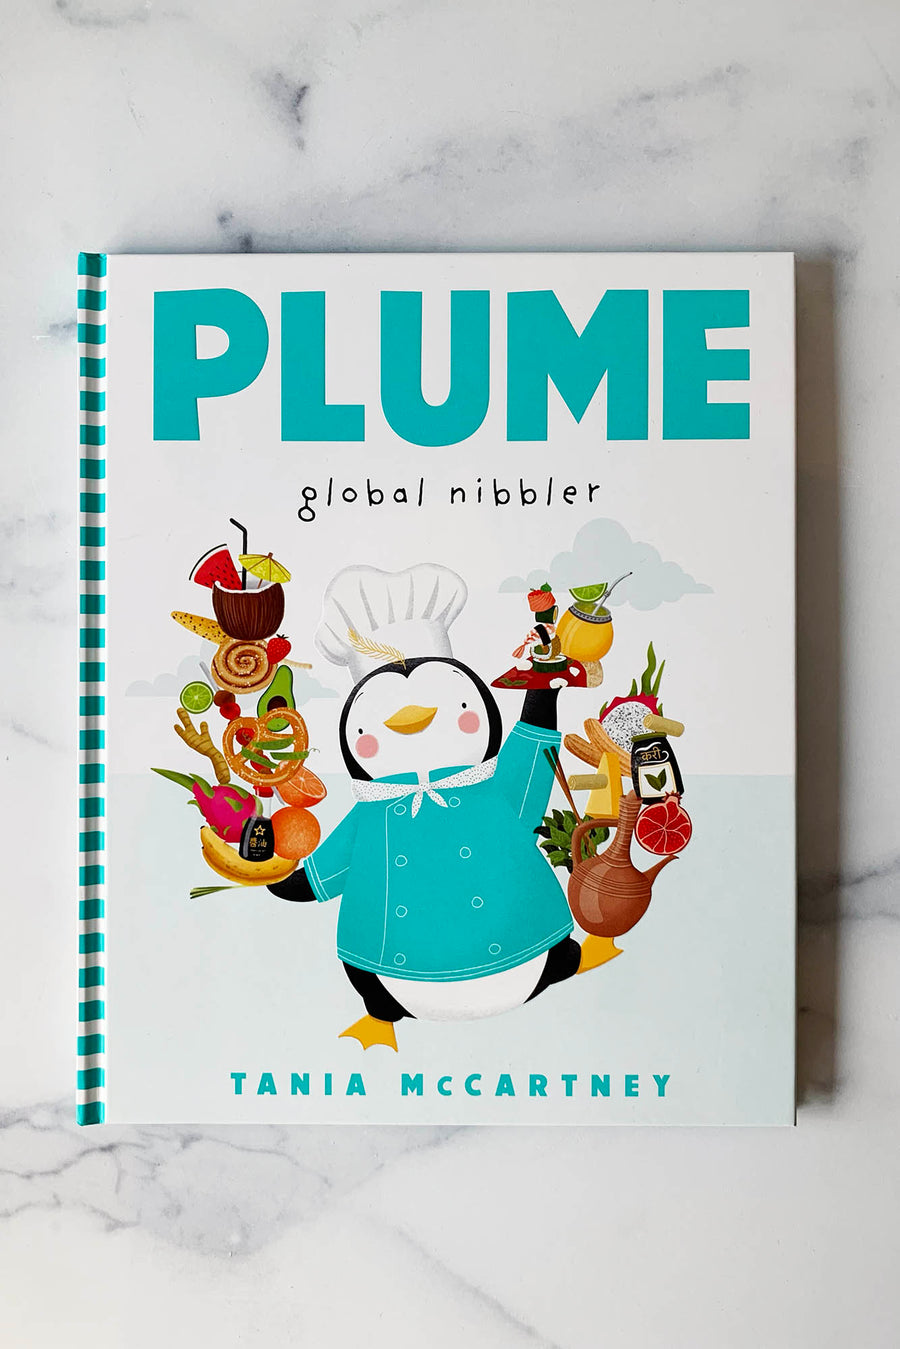 Plume: Global Nibbler